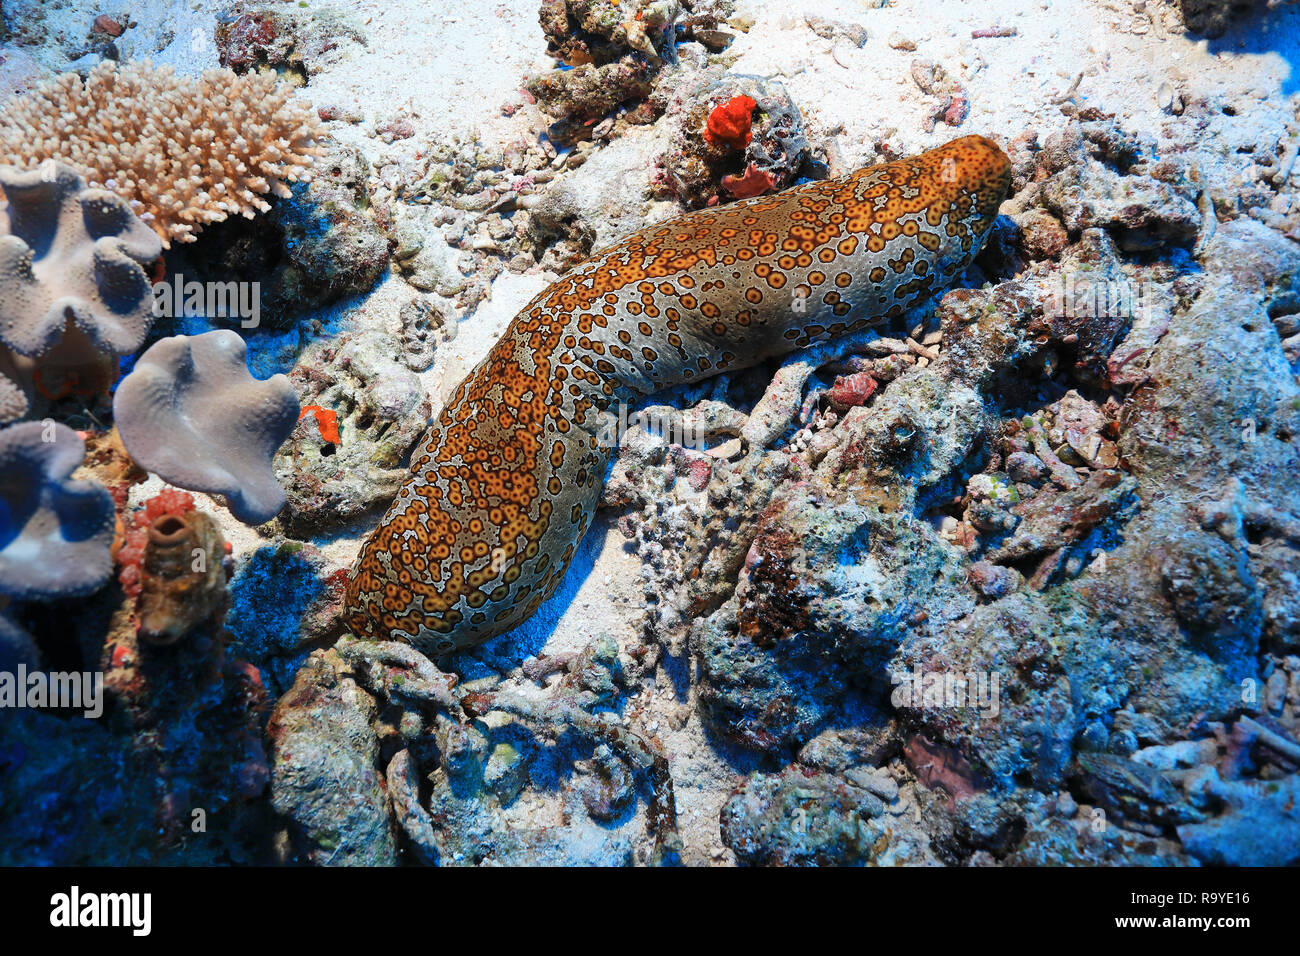 Leopard sea cucumber (Bohadschia argus) underwater in the Great Barrier Reef of Australia Stock Photo